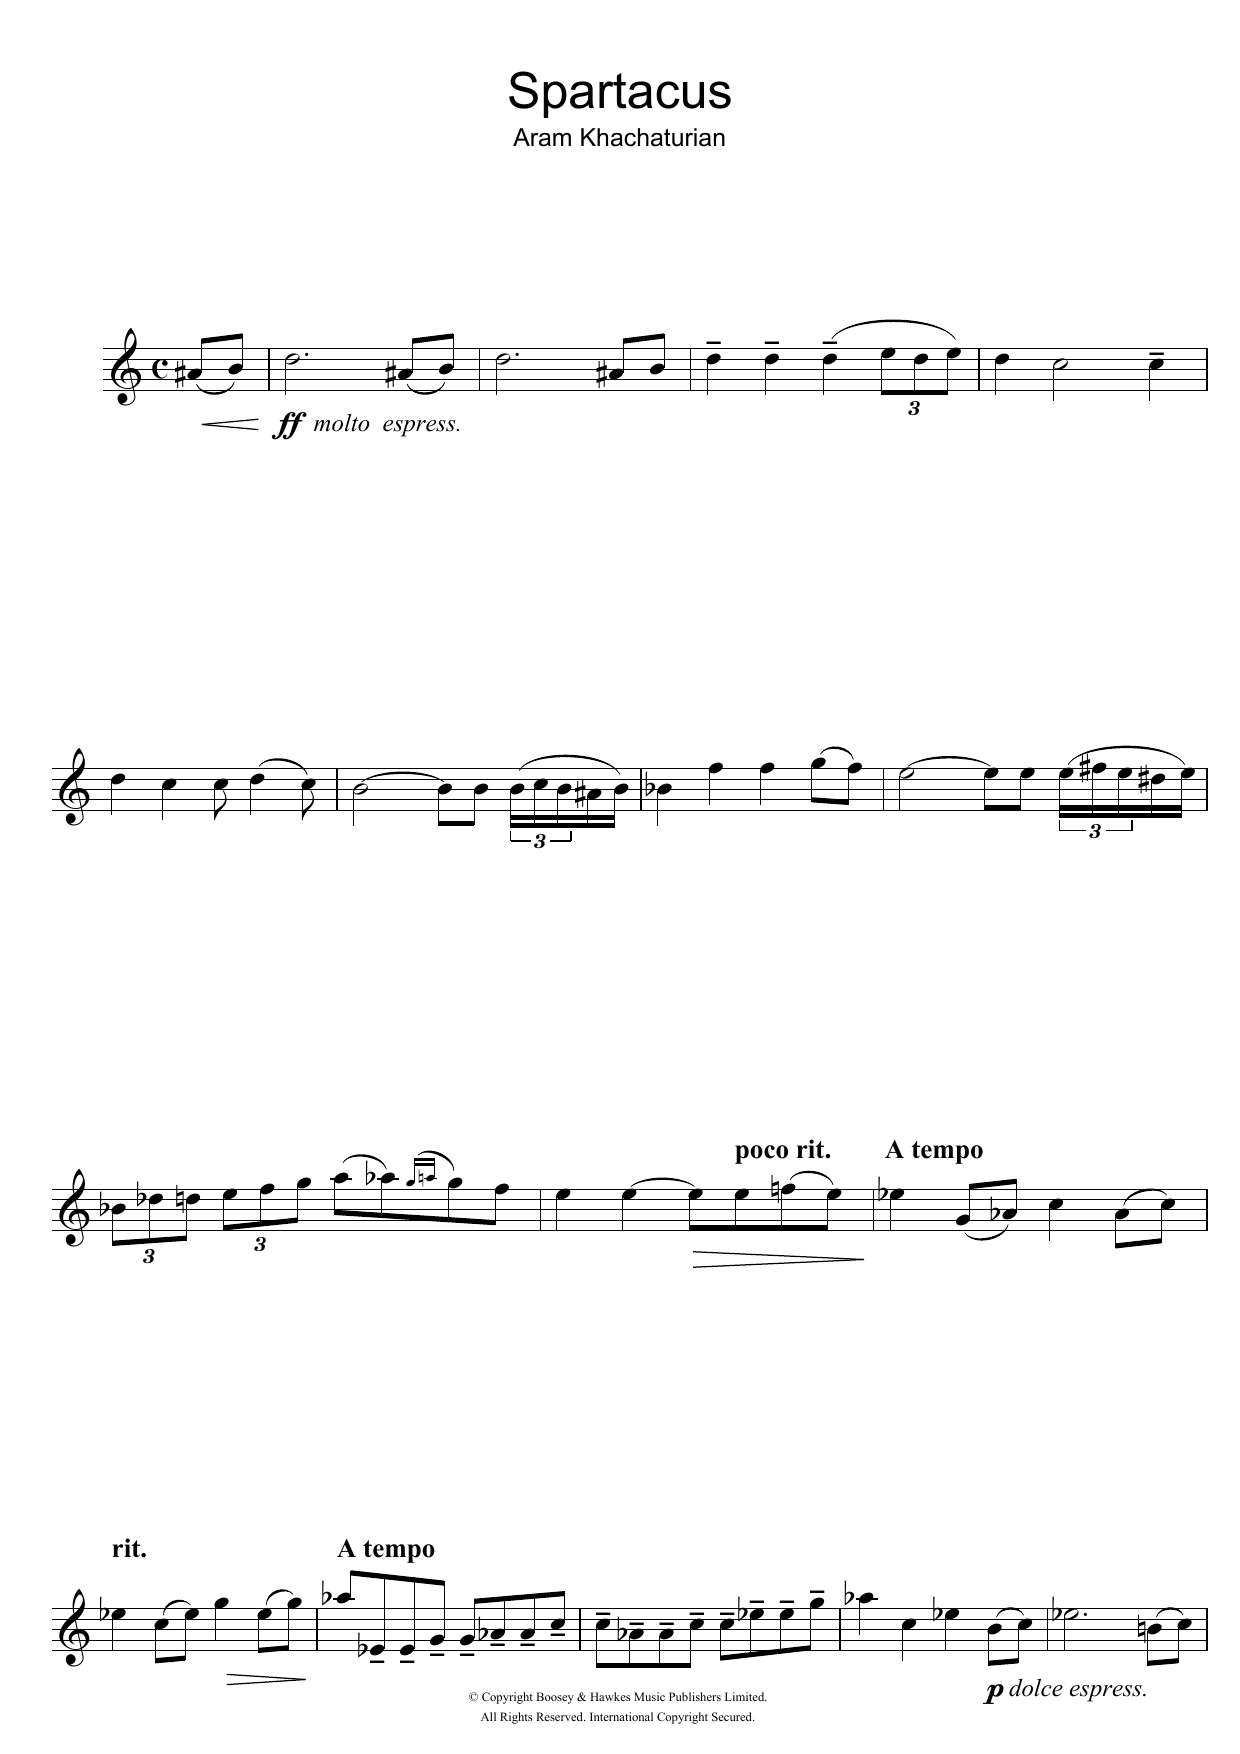 Aram Khachaturian Spartacus (Love Theme) Sheet Music Notes & Chords for Alto Saxophone - Download or Print PDF